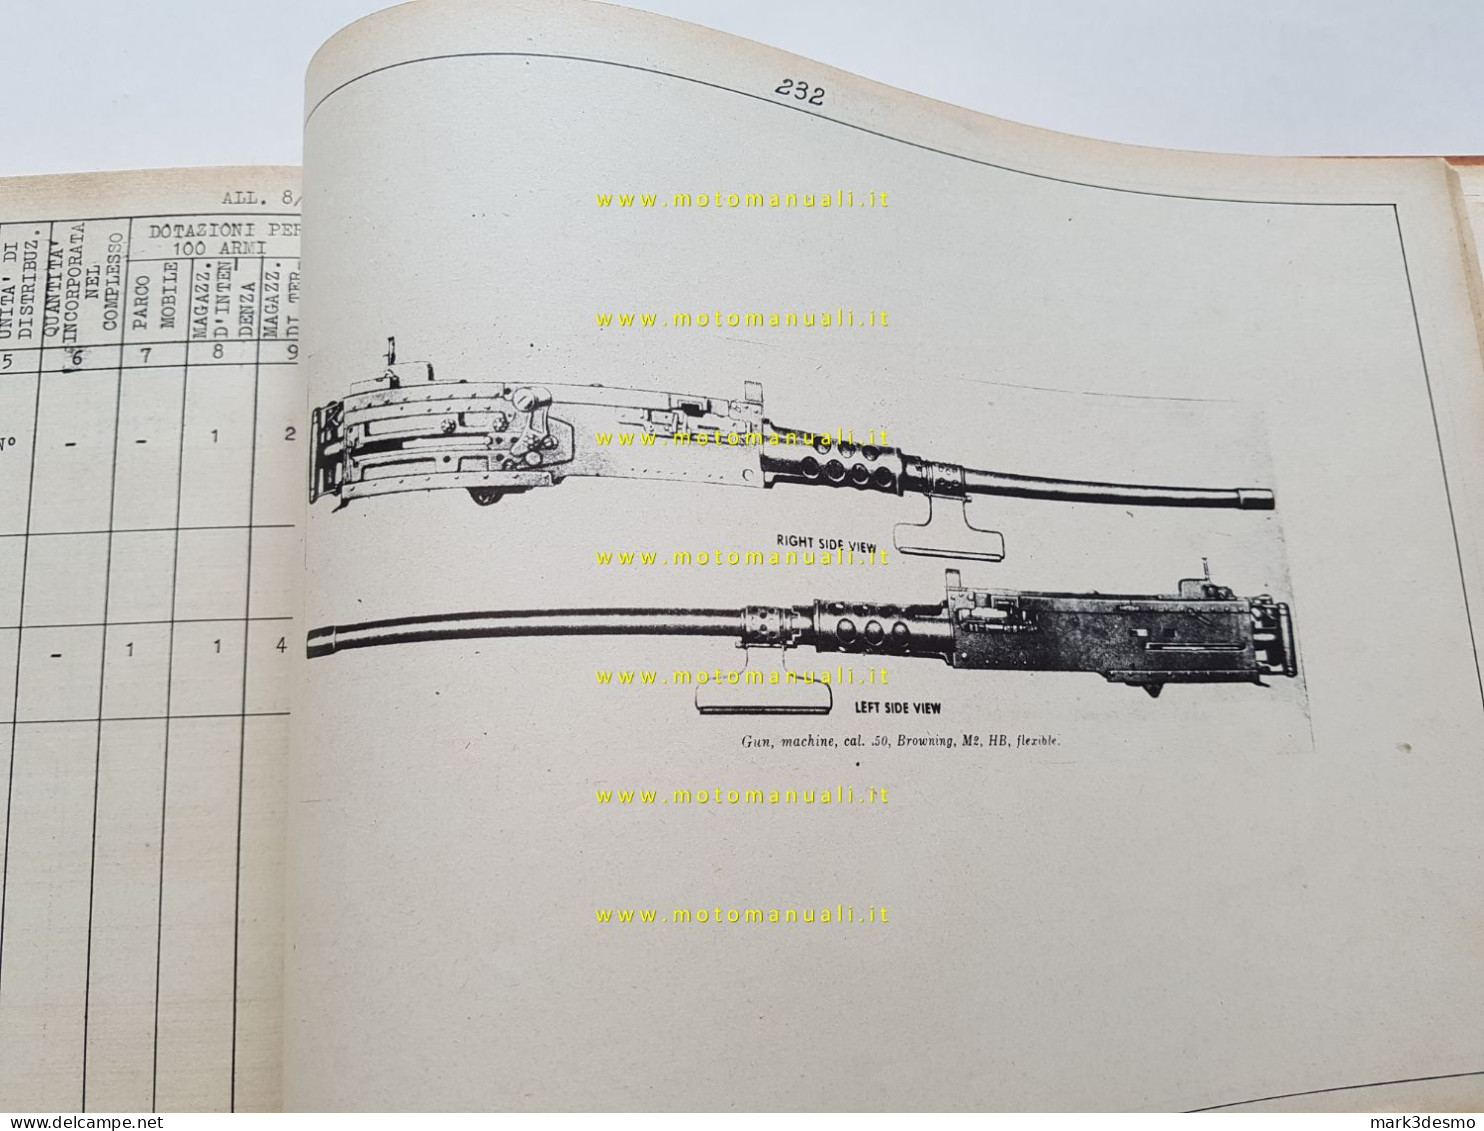 Browning mitragliatrice mod. M2 HB catalogo ricambi 1956 originale